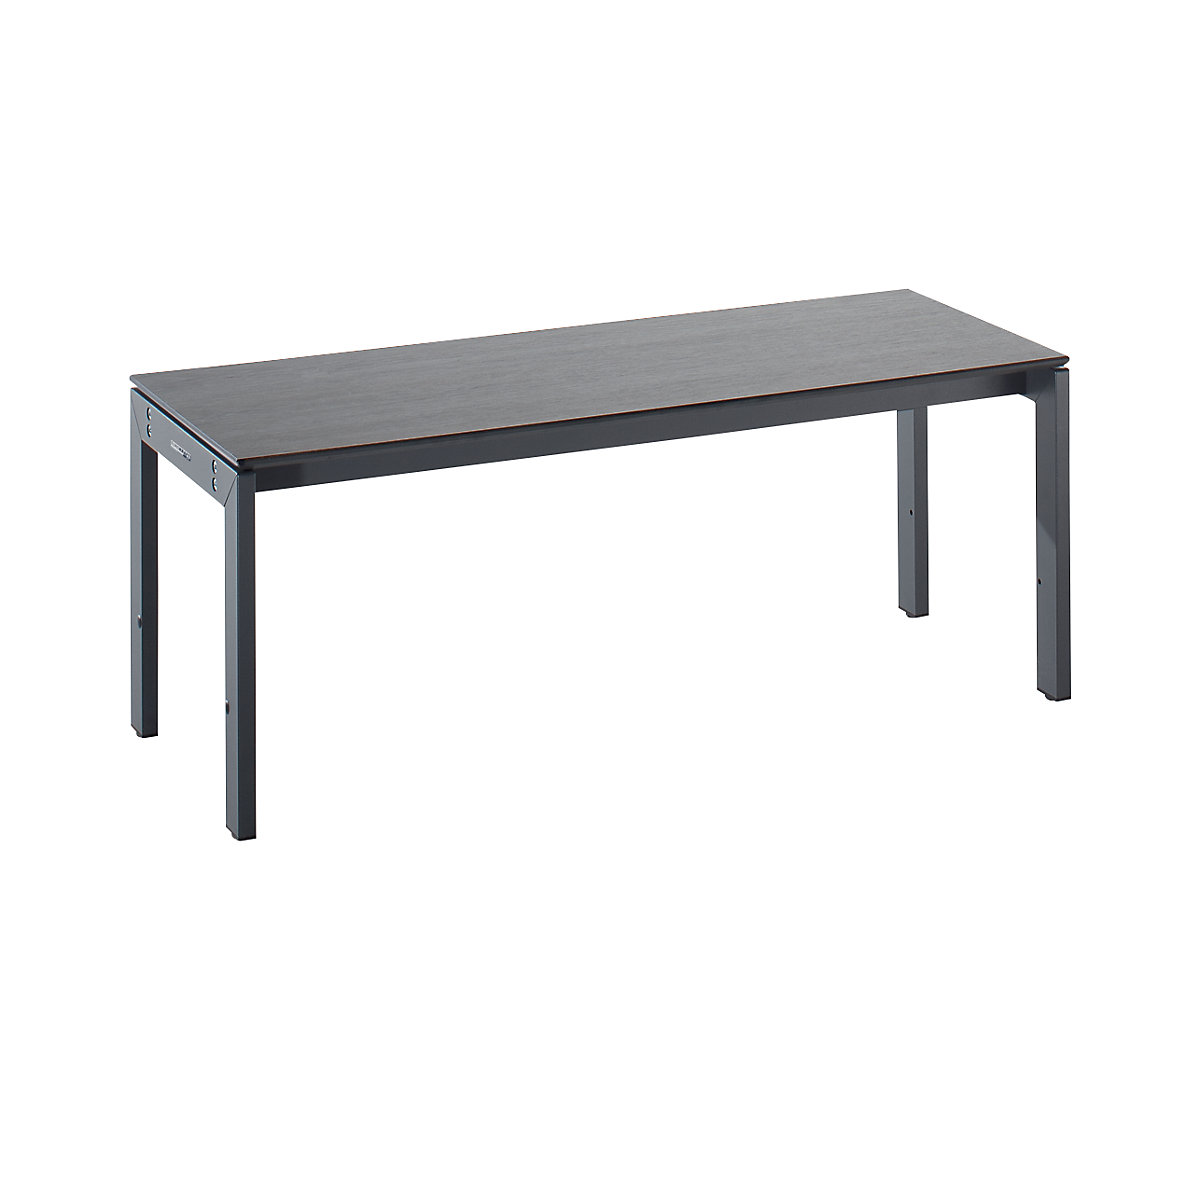 EUROKRAFTpro – Changing room bench with steel frame, LxHxD 1000 x 415 x 400 mm, oak silver seat